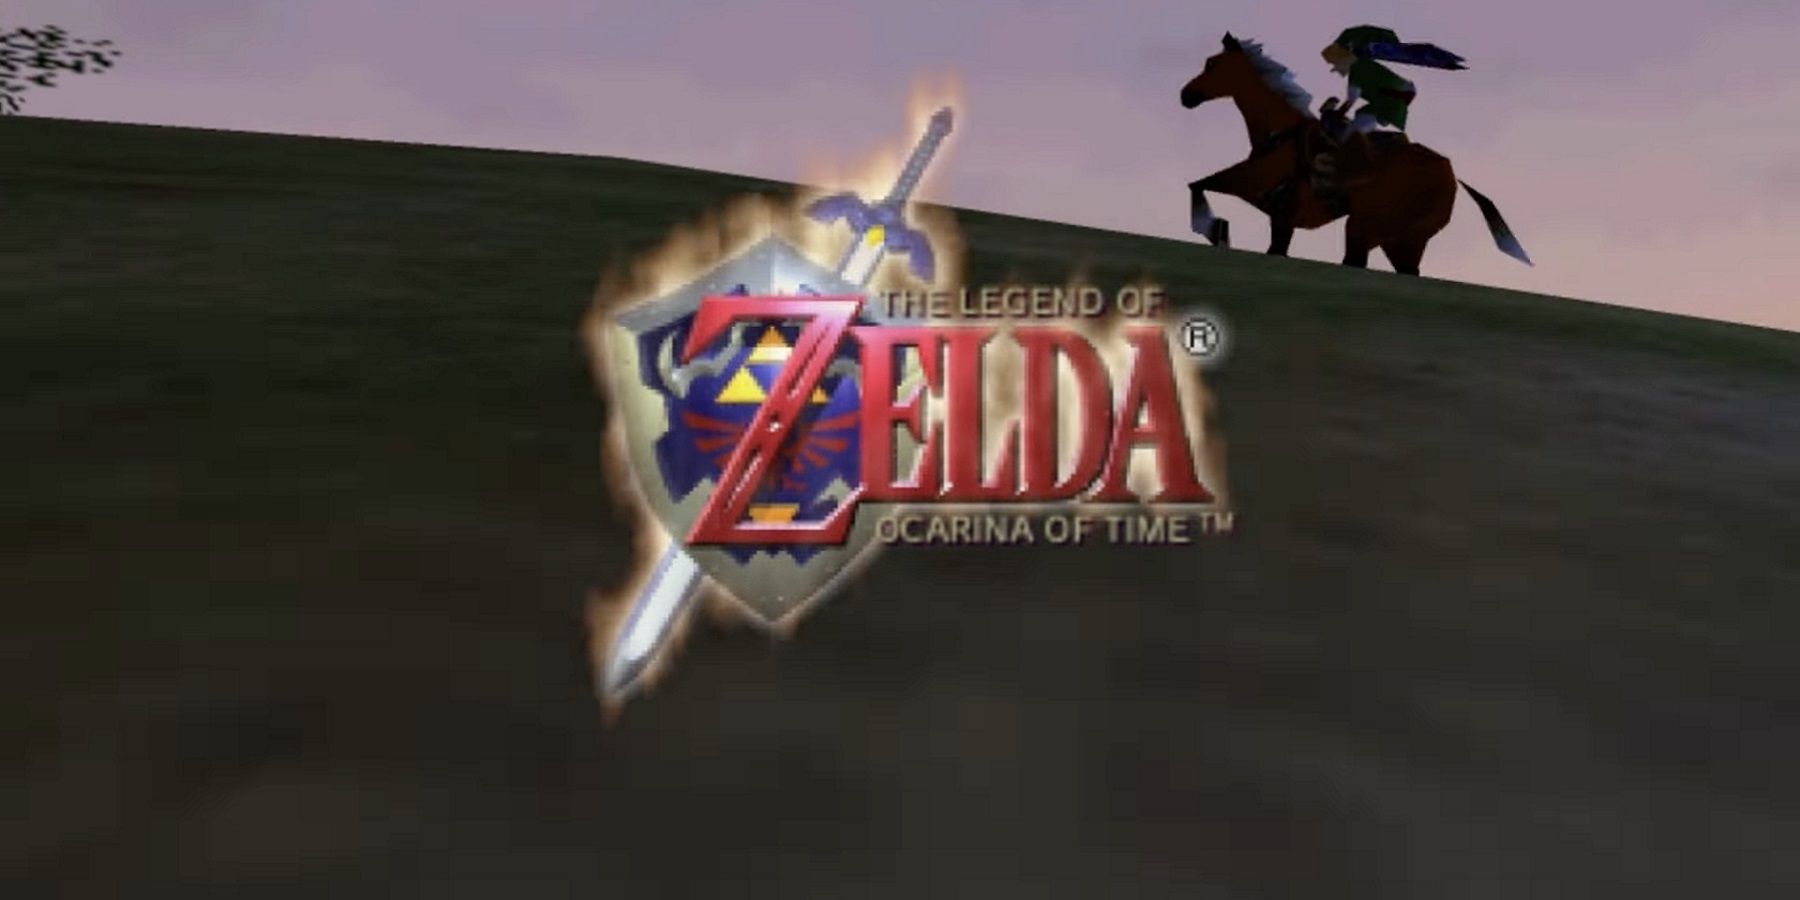 The Legend of Zelda: Ocarina of Time (Ship of Harkinian